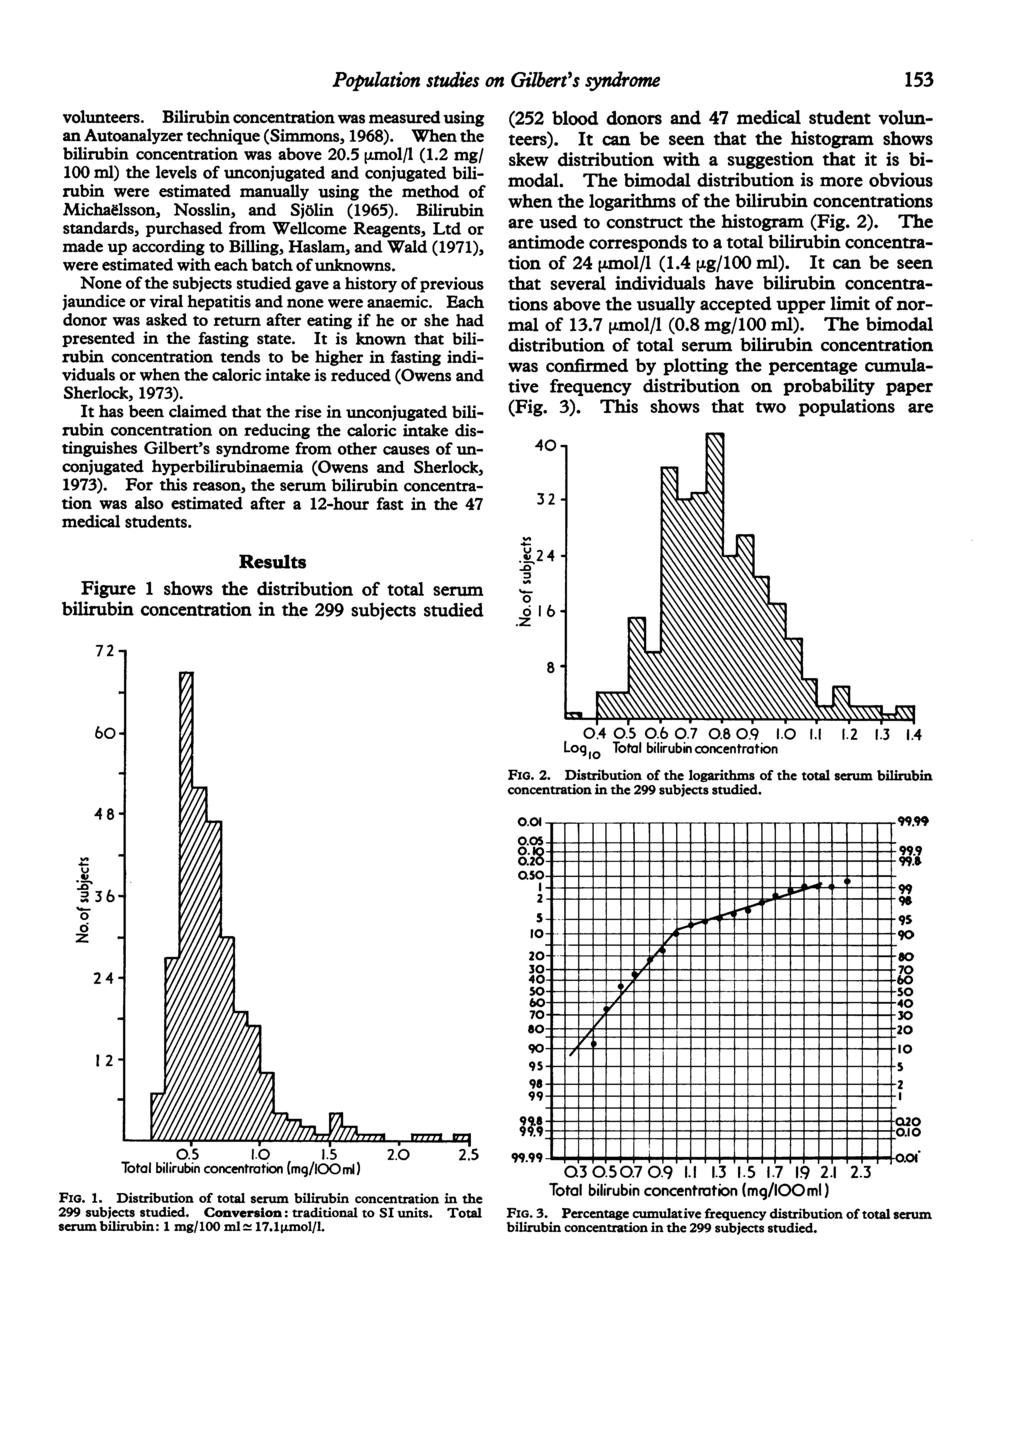 volunteers. Bilirubin concentration was measured using an Autoanalyzer technique (Simmons, 1968). When the bilirubin concentration was above 20.5,umol/l (1.